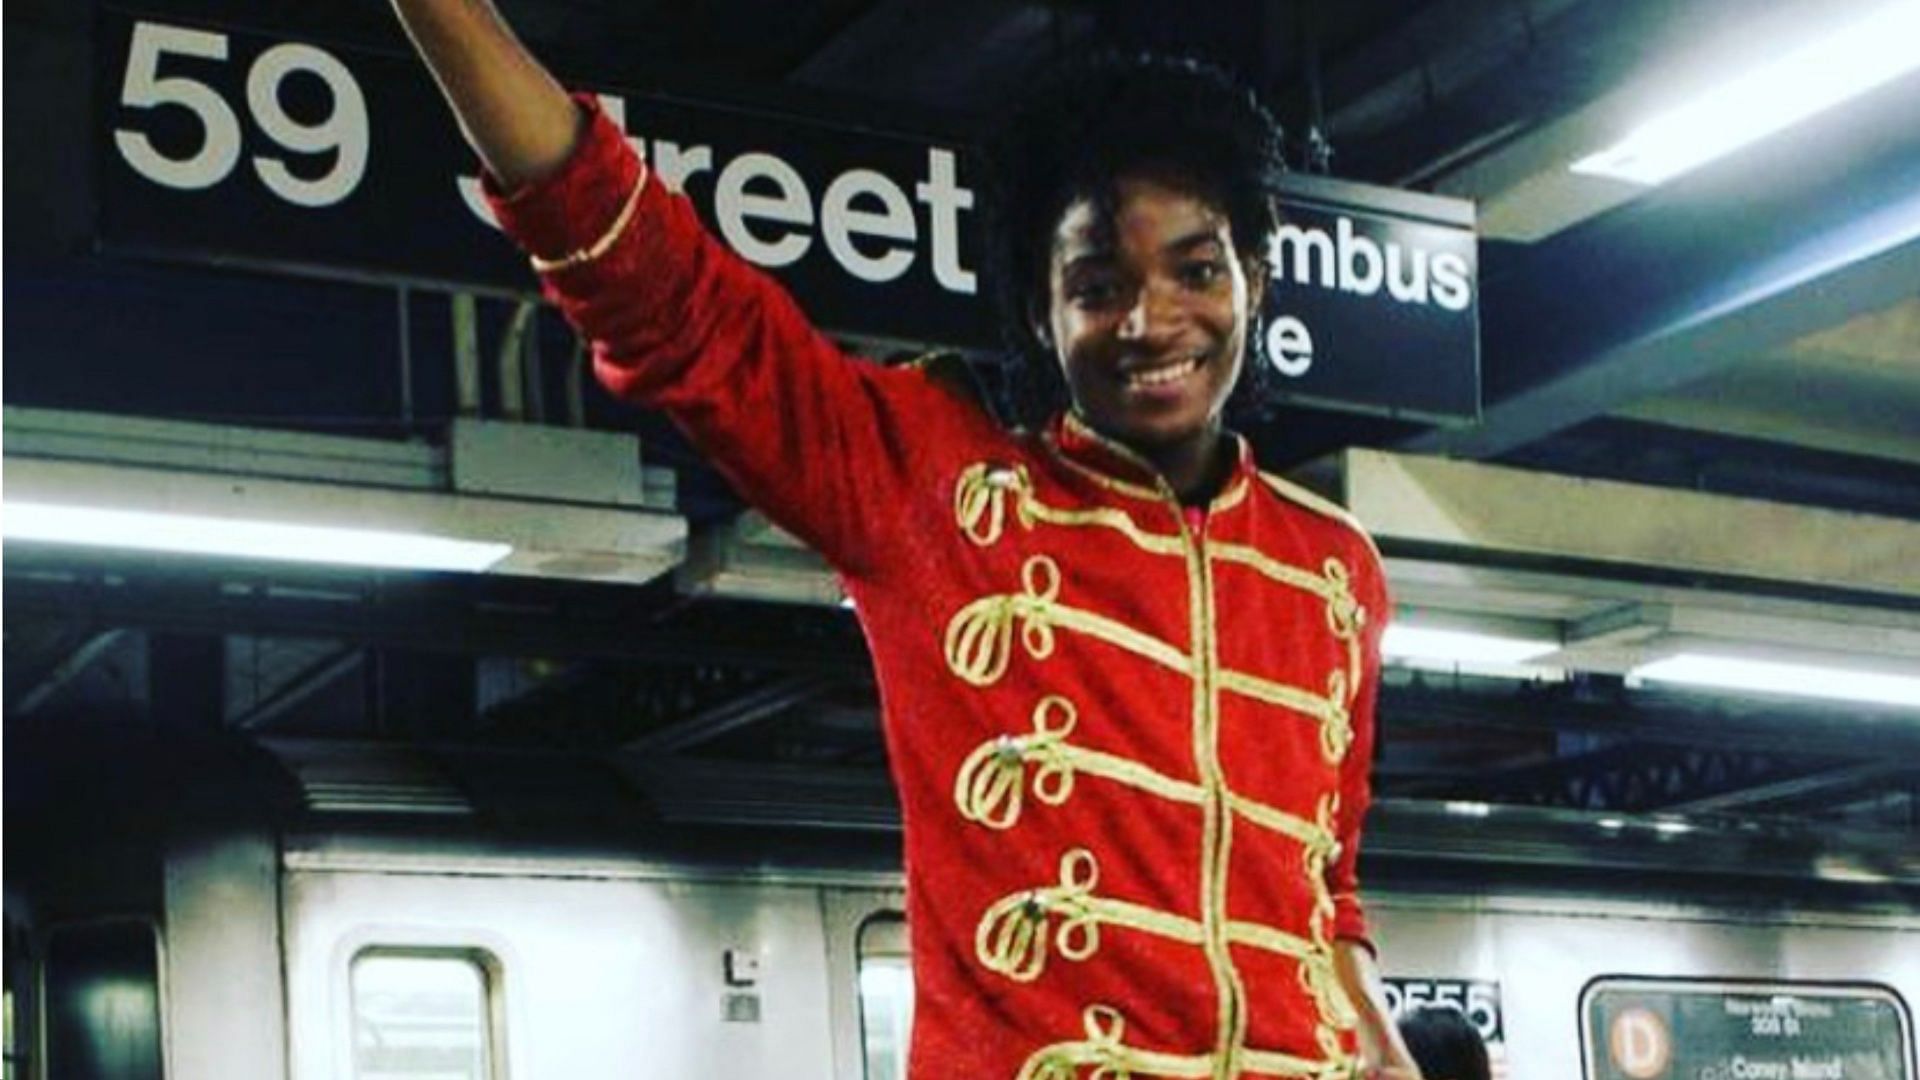 Neely performed on subways in exchange for money. (Photo via Instagram/tbo.harlem)